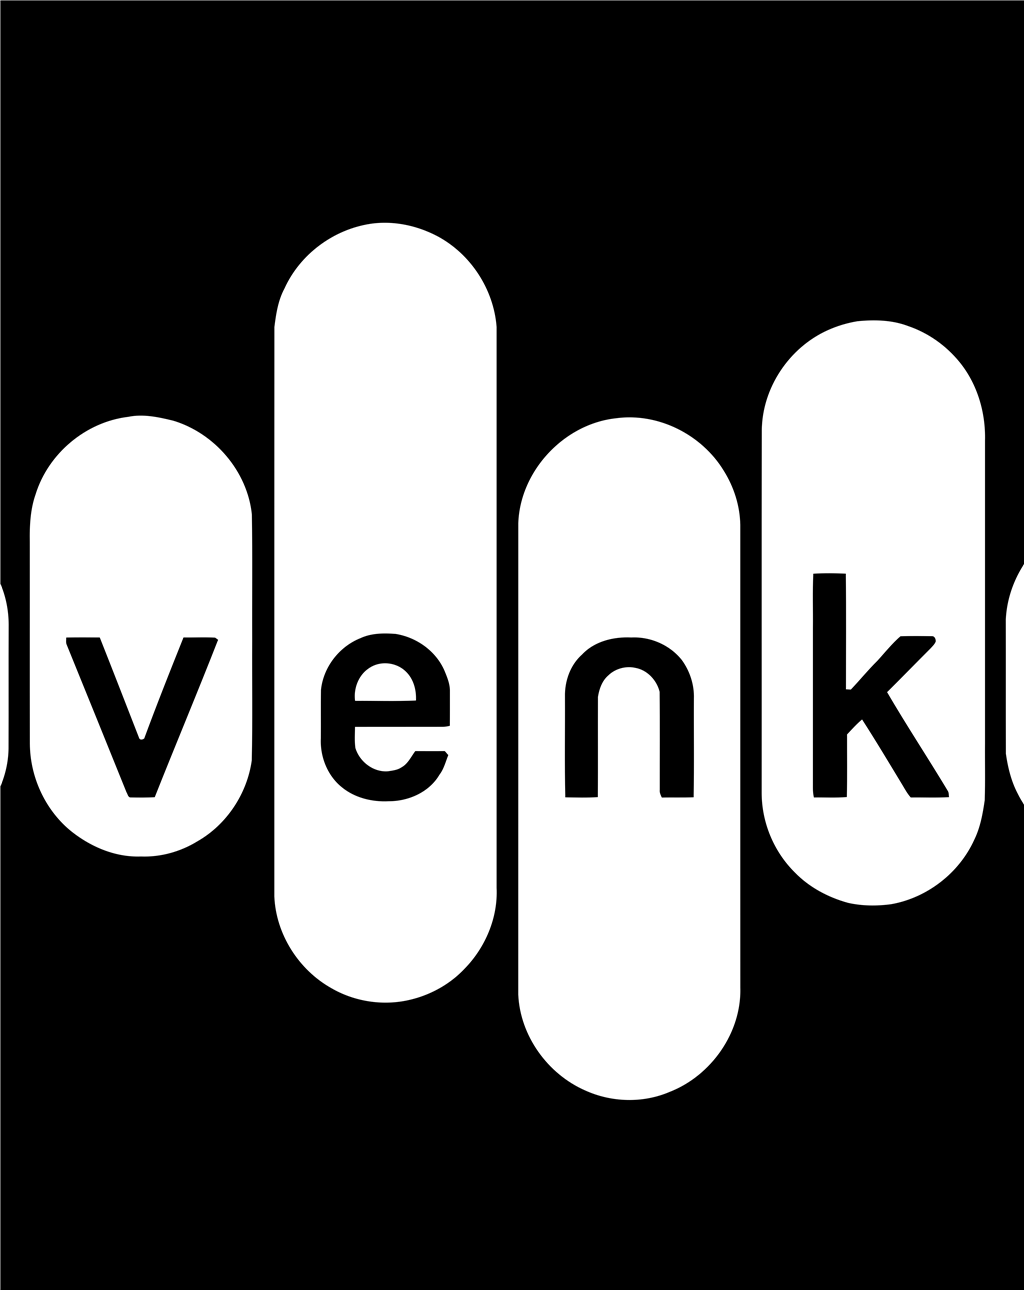 Evenko logotype, transparent .png, medium, large